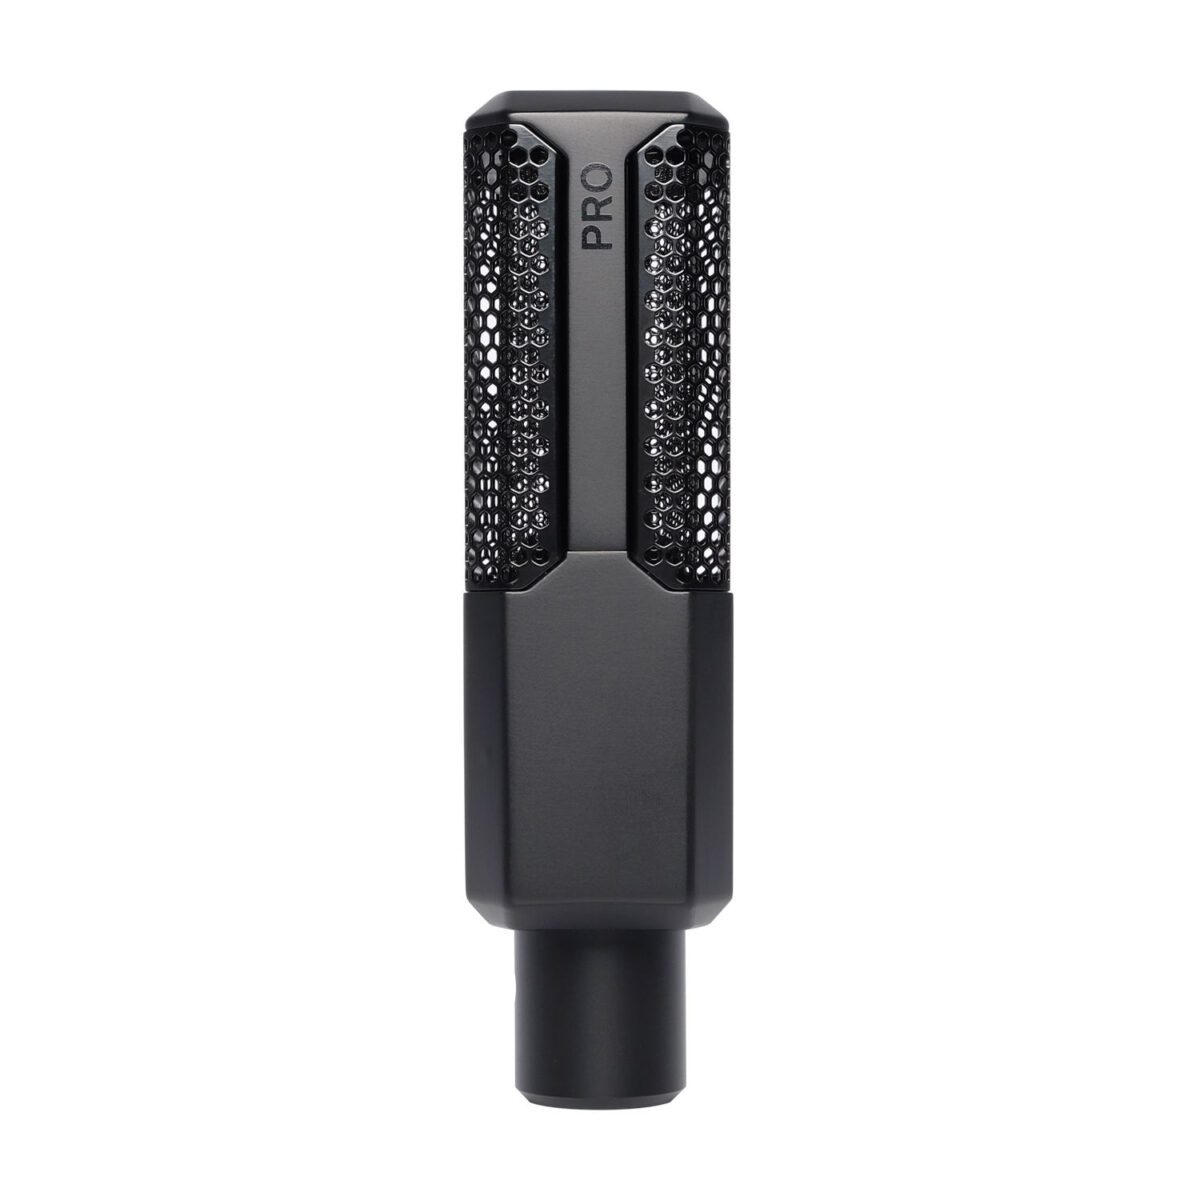 Lewitt LCT-240 Pro Condenser Microphone (Black)